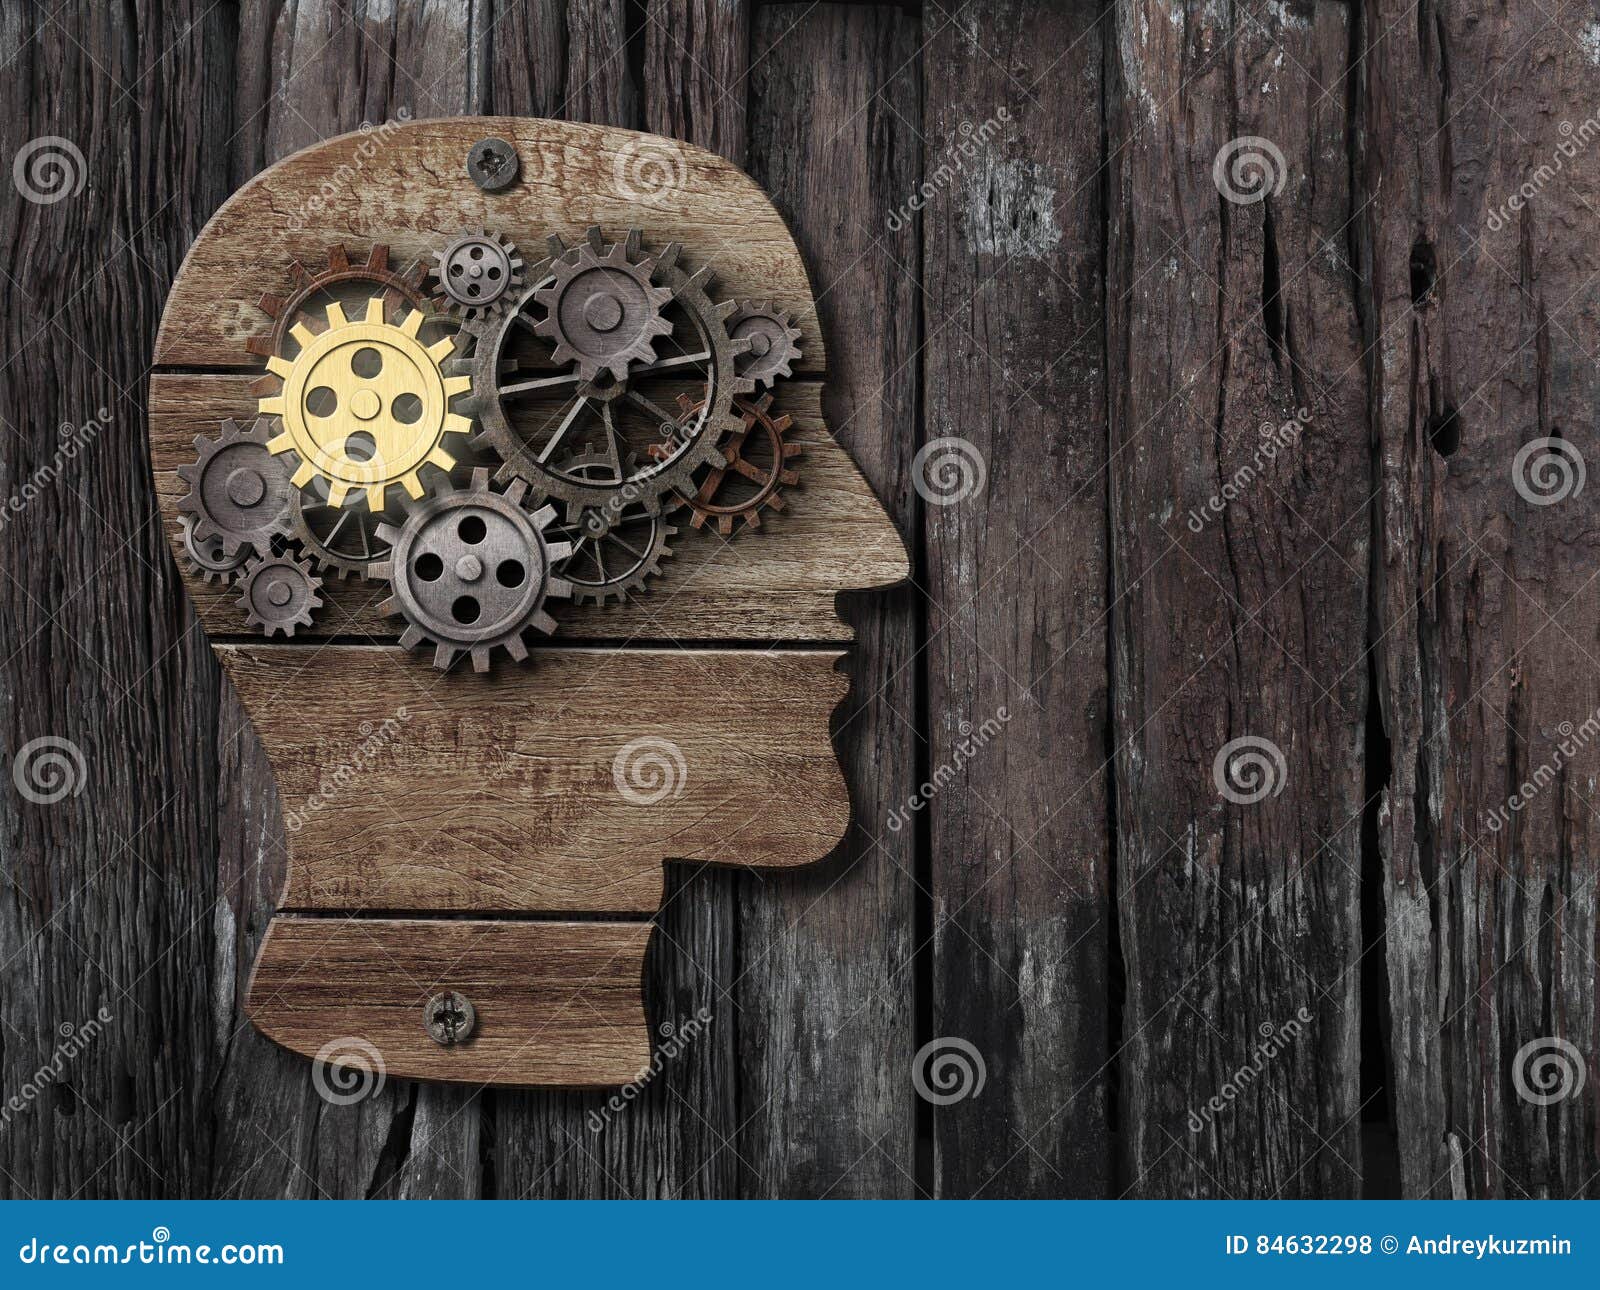 brain activity, psychology, memory concept